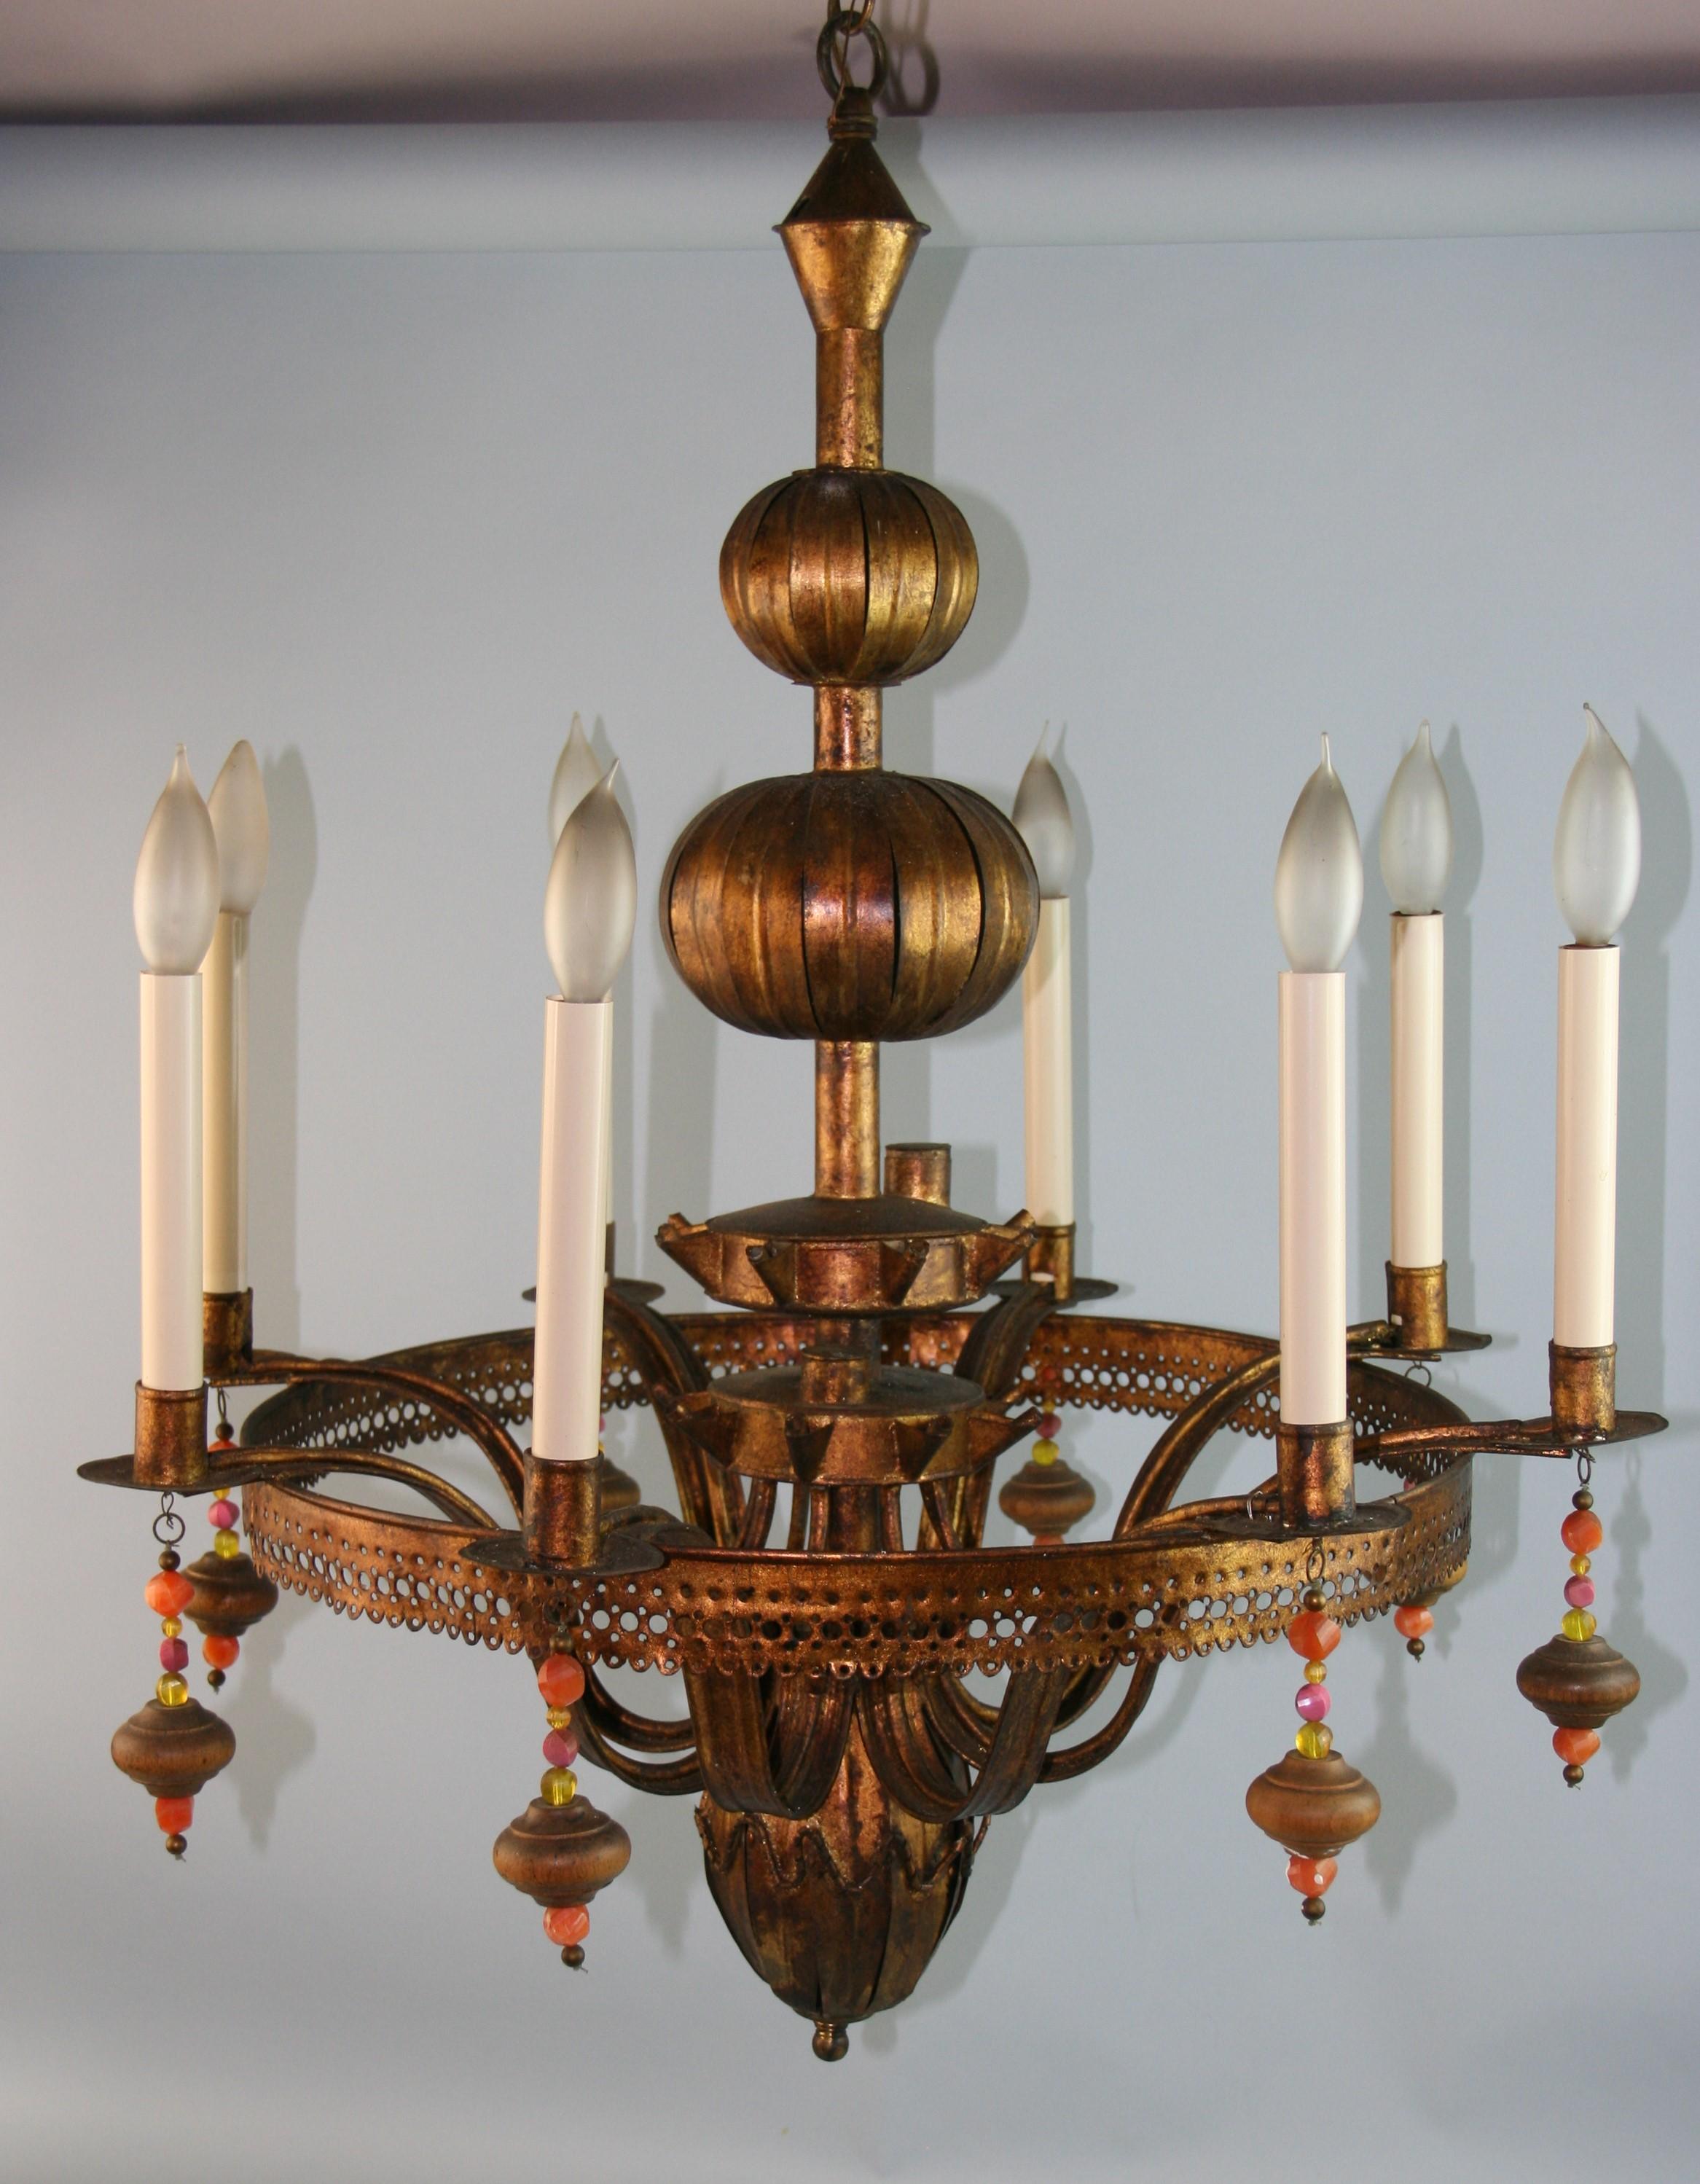 1446 Italian 6 light chandelier replica of an ancient Roman oil chandelier
rewired
